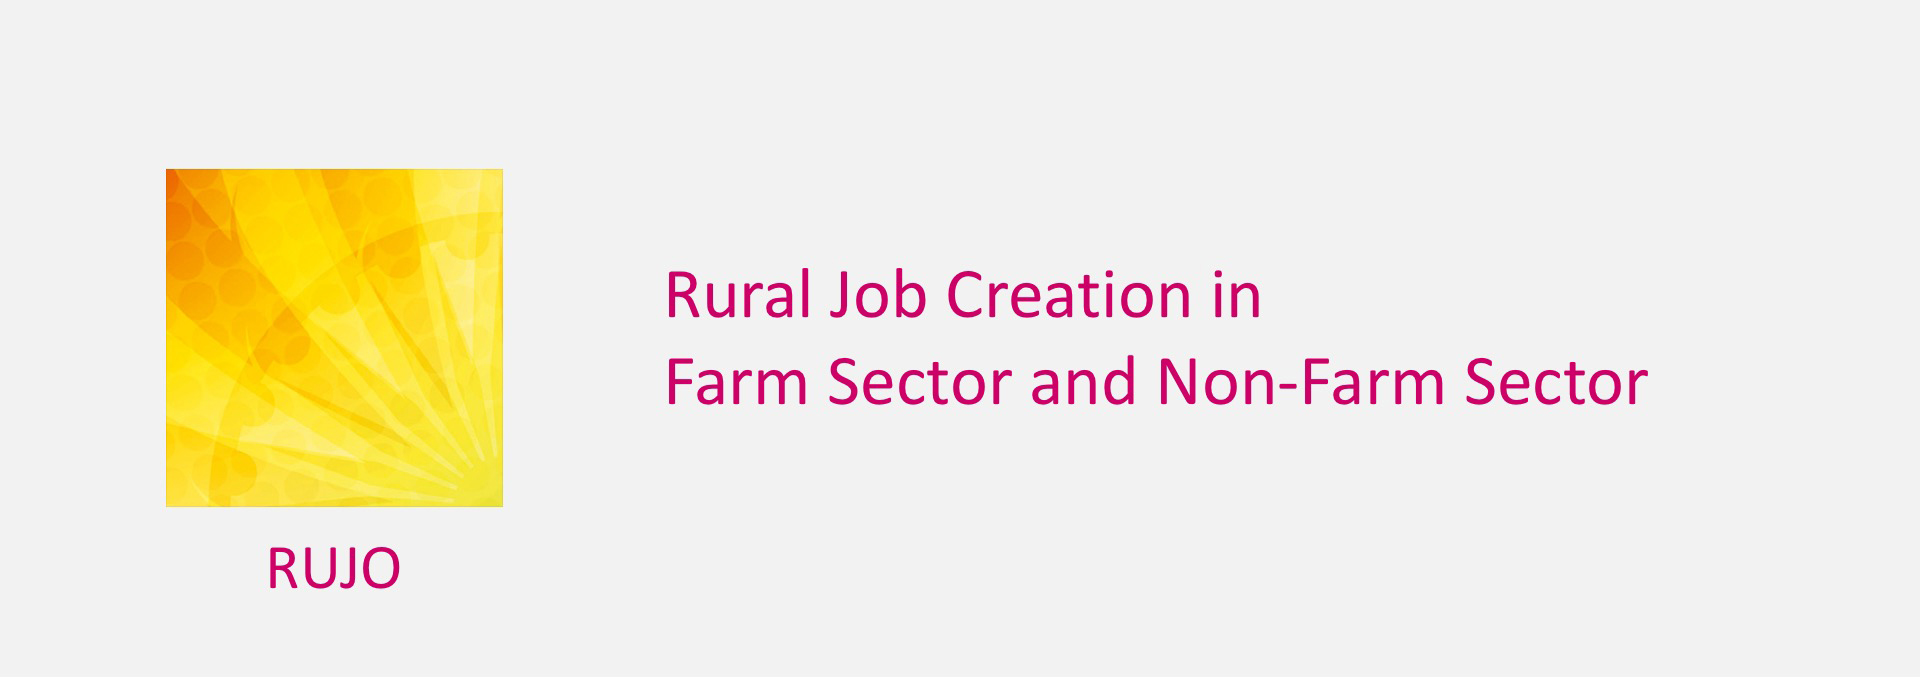 Rural Job Creation in Farm Sector and Non-Farm Sector